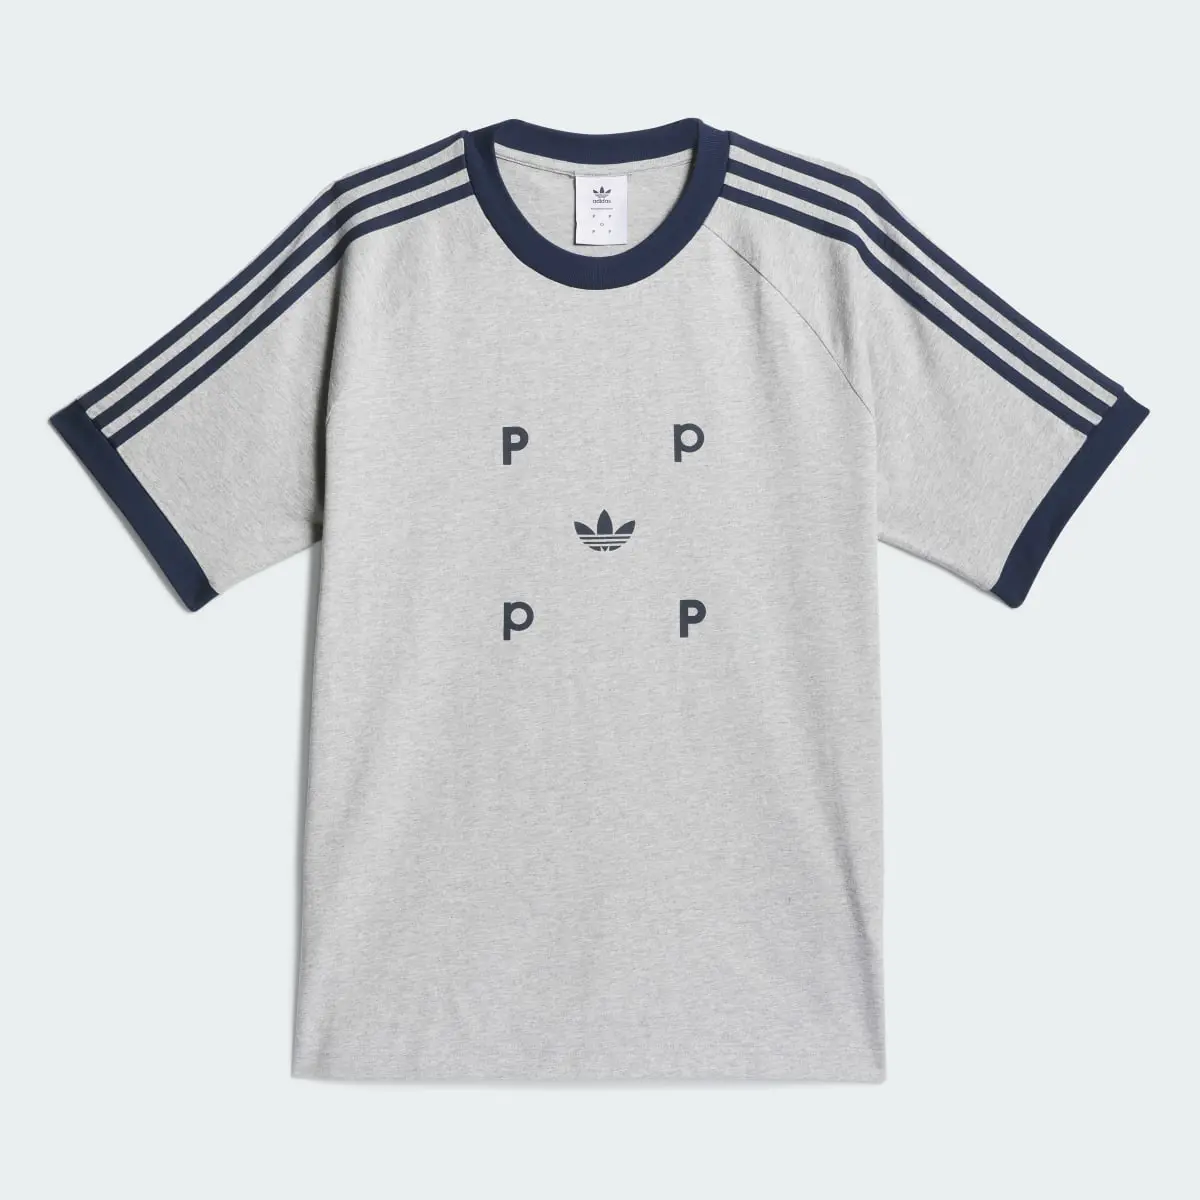 Adidas T-shirt Clássica Pop. 2